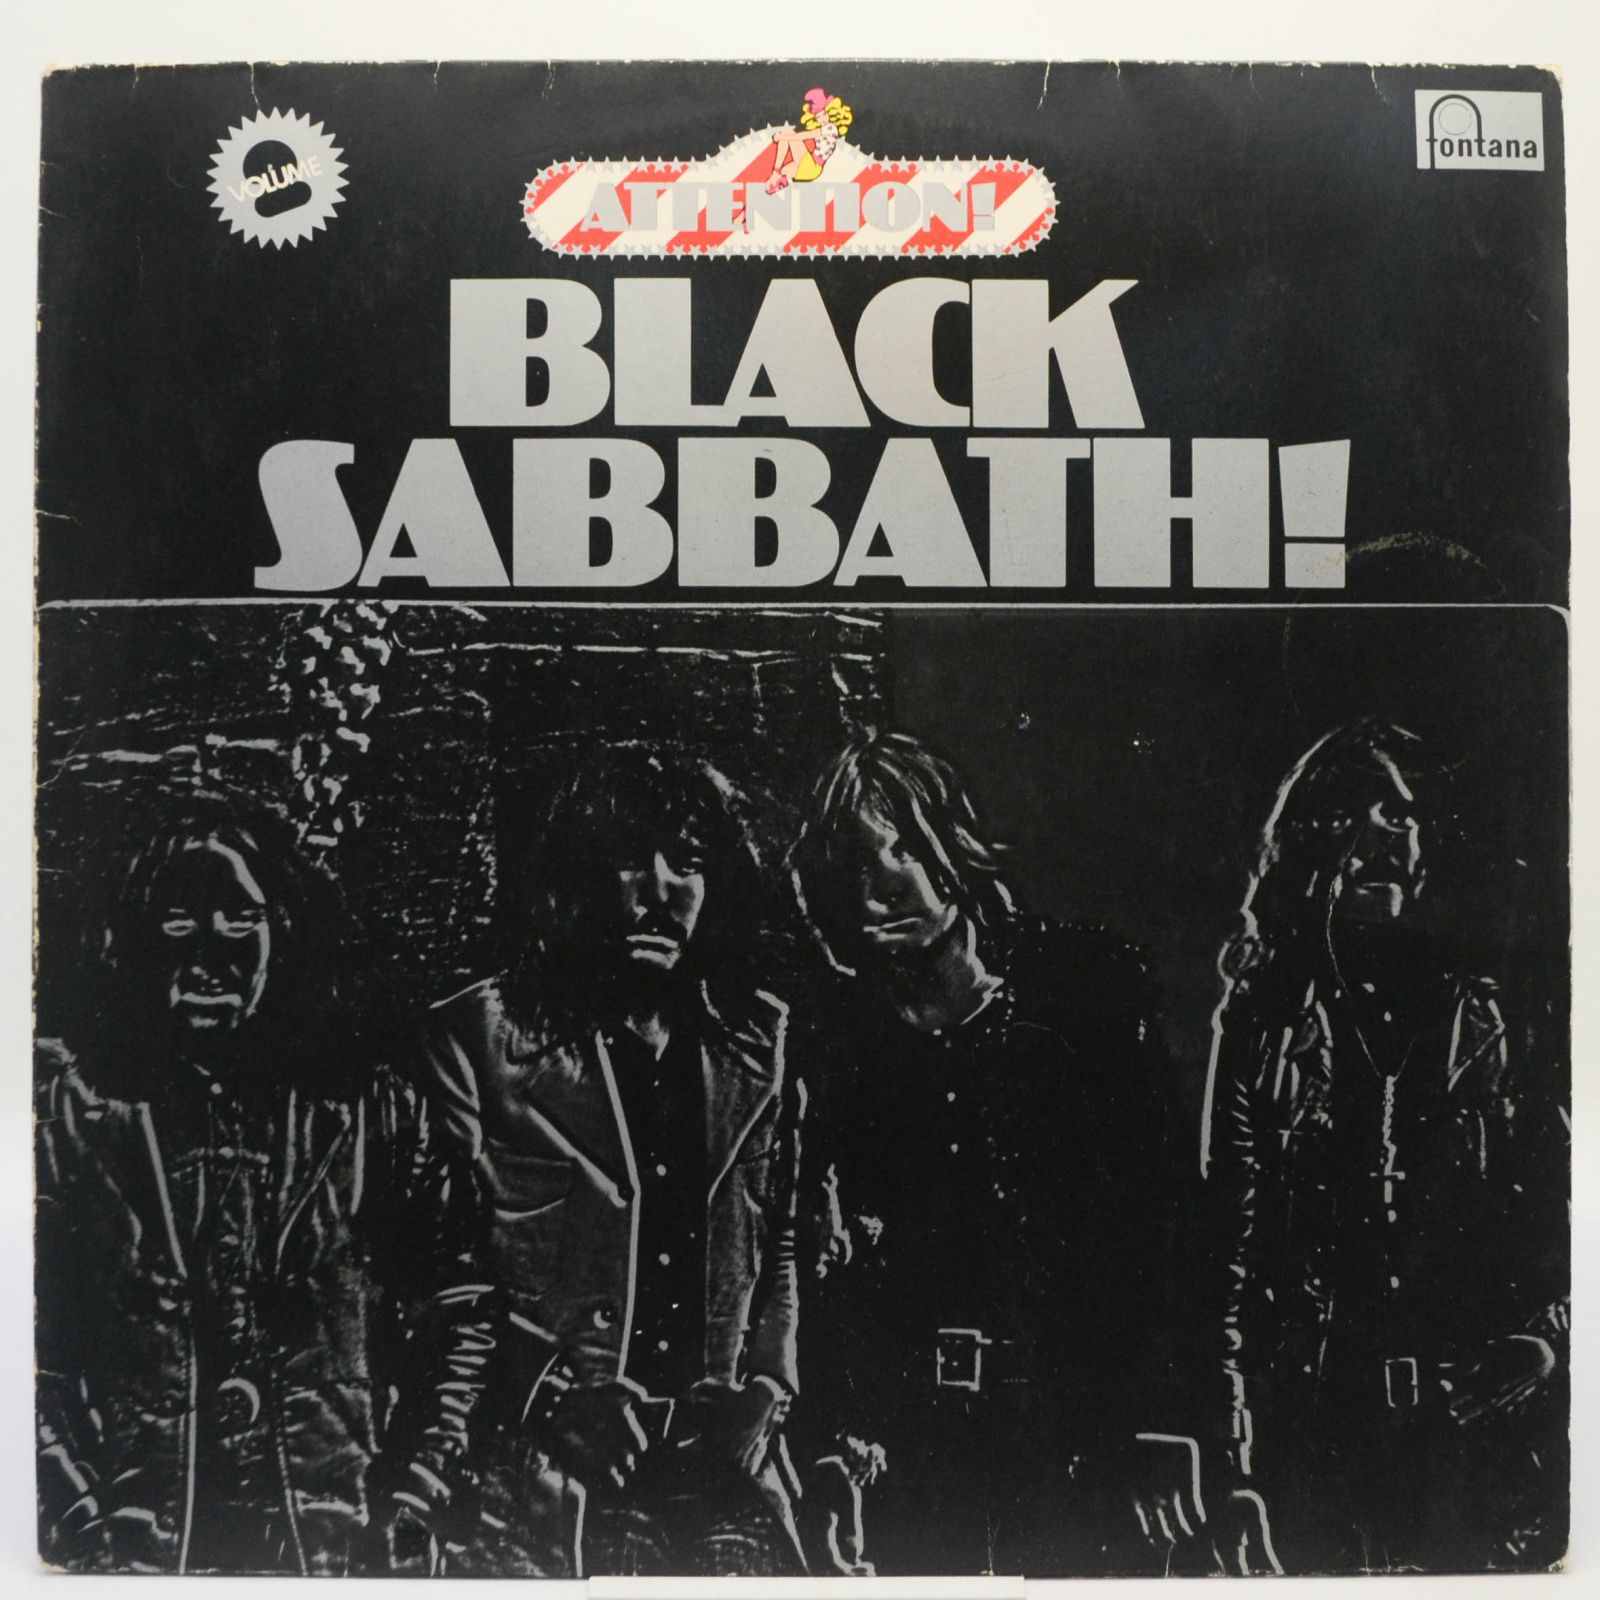 Attention! Black Sabbath Vol. 2, 1974